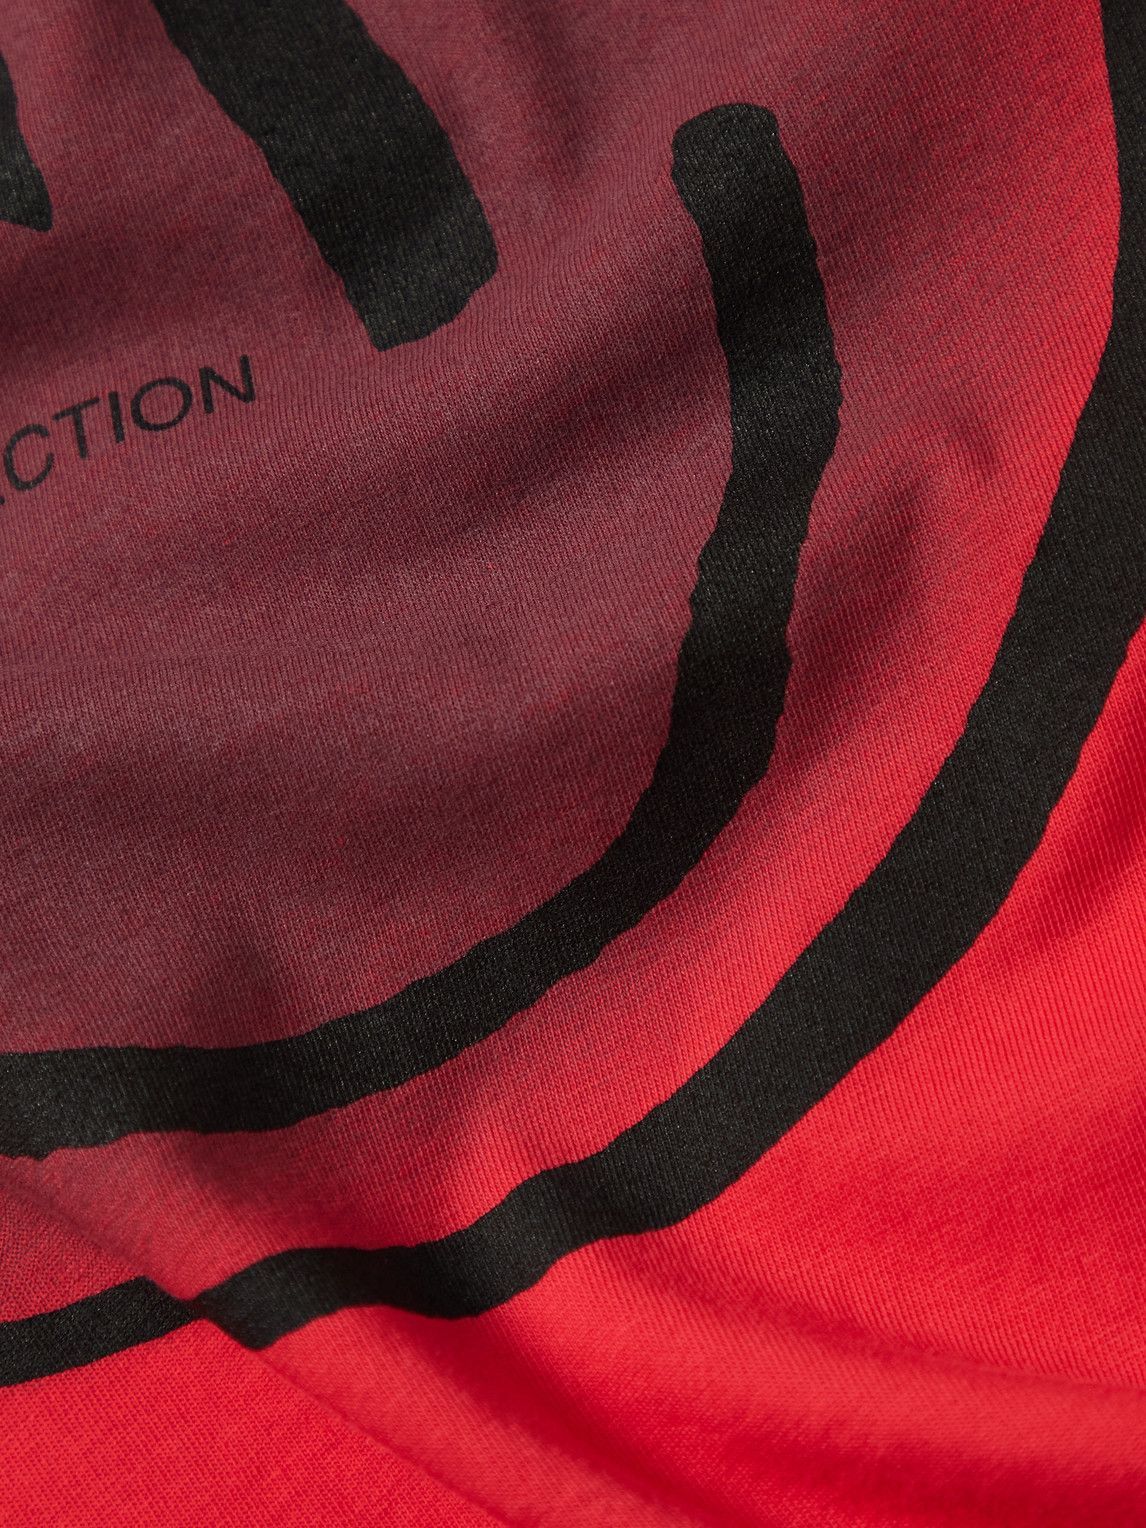 1017 ALYX 9SM - Logo-Print Cotton-Jersey T-Shirt - Red